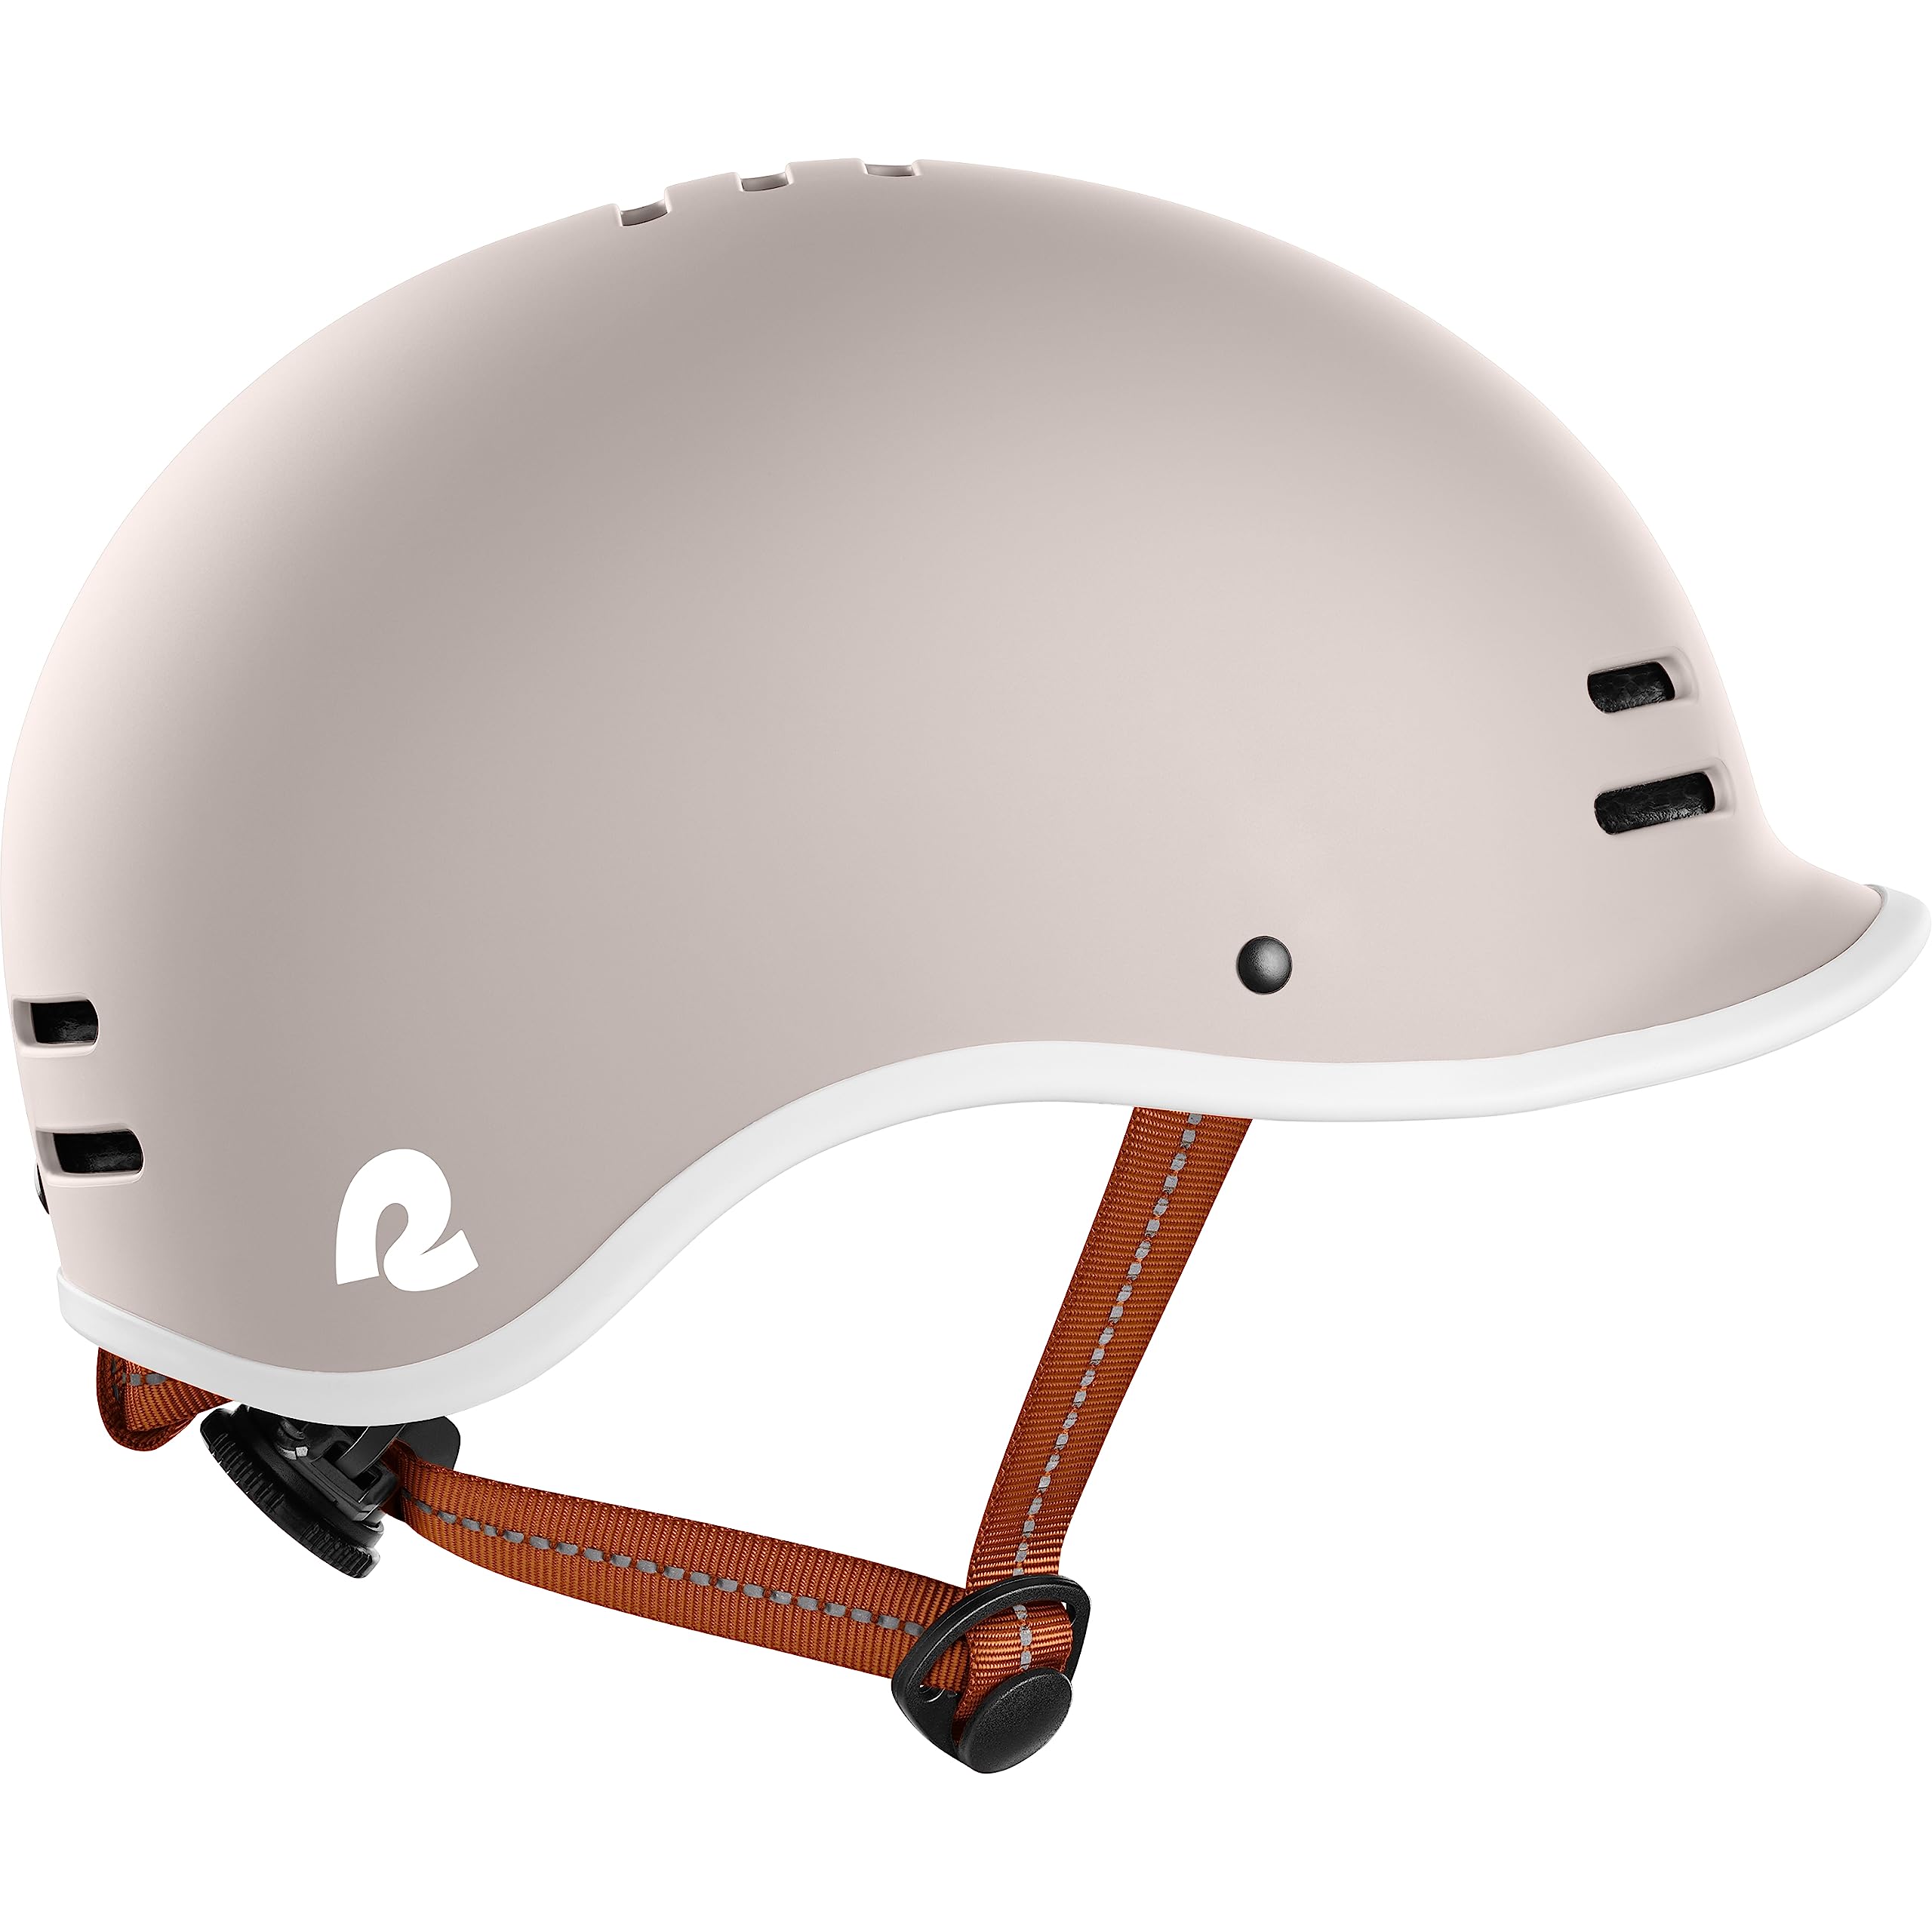 Retrospec Remi Adult Bike Helmet for Men & Women - Bicycle Helmet for Commuting, Road Biking, Skating with Adjustable Ergo Knob Dial